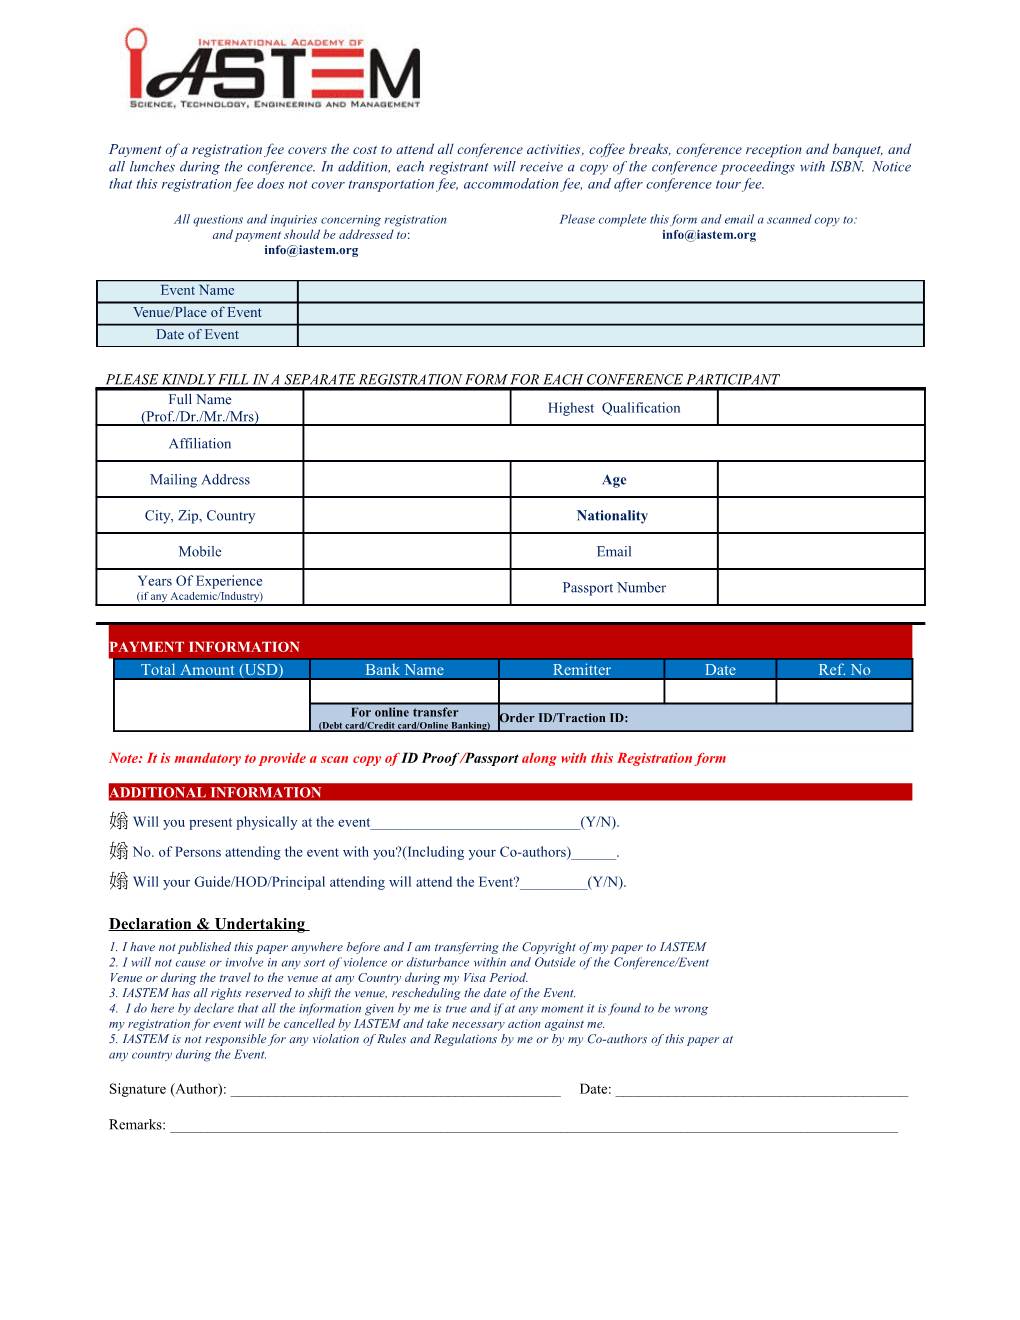 Ieee Rtcsa 2014 Registration Form